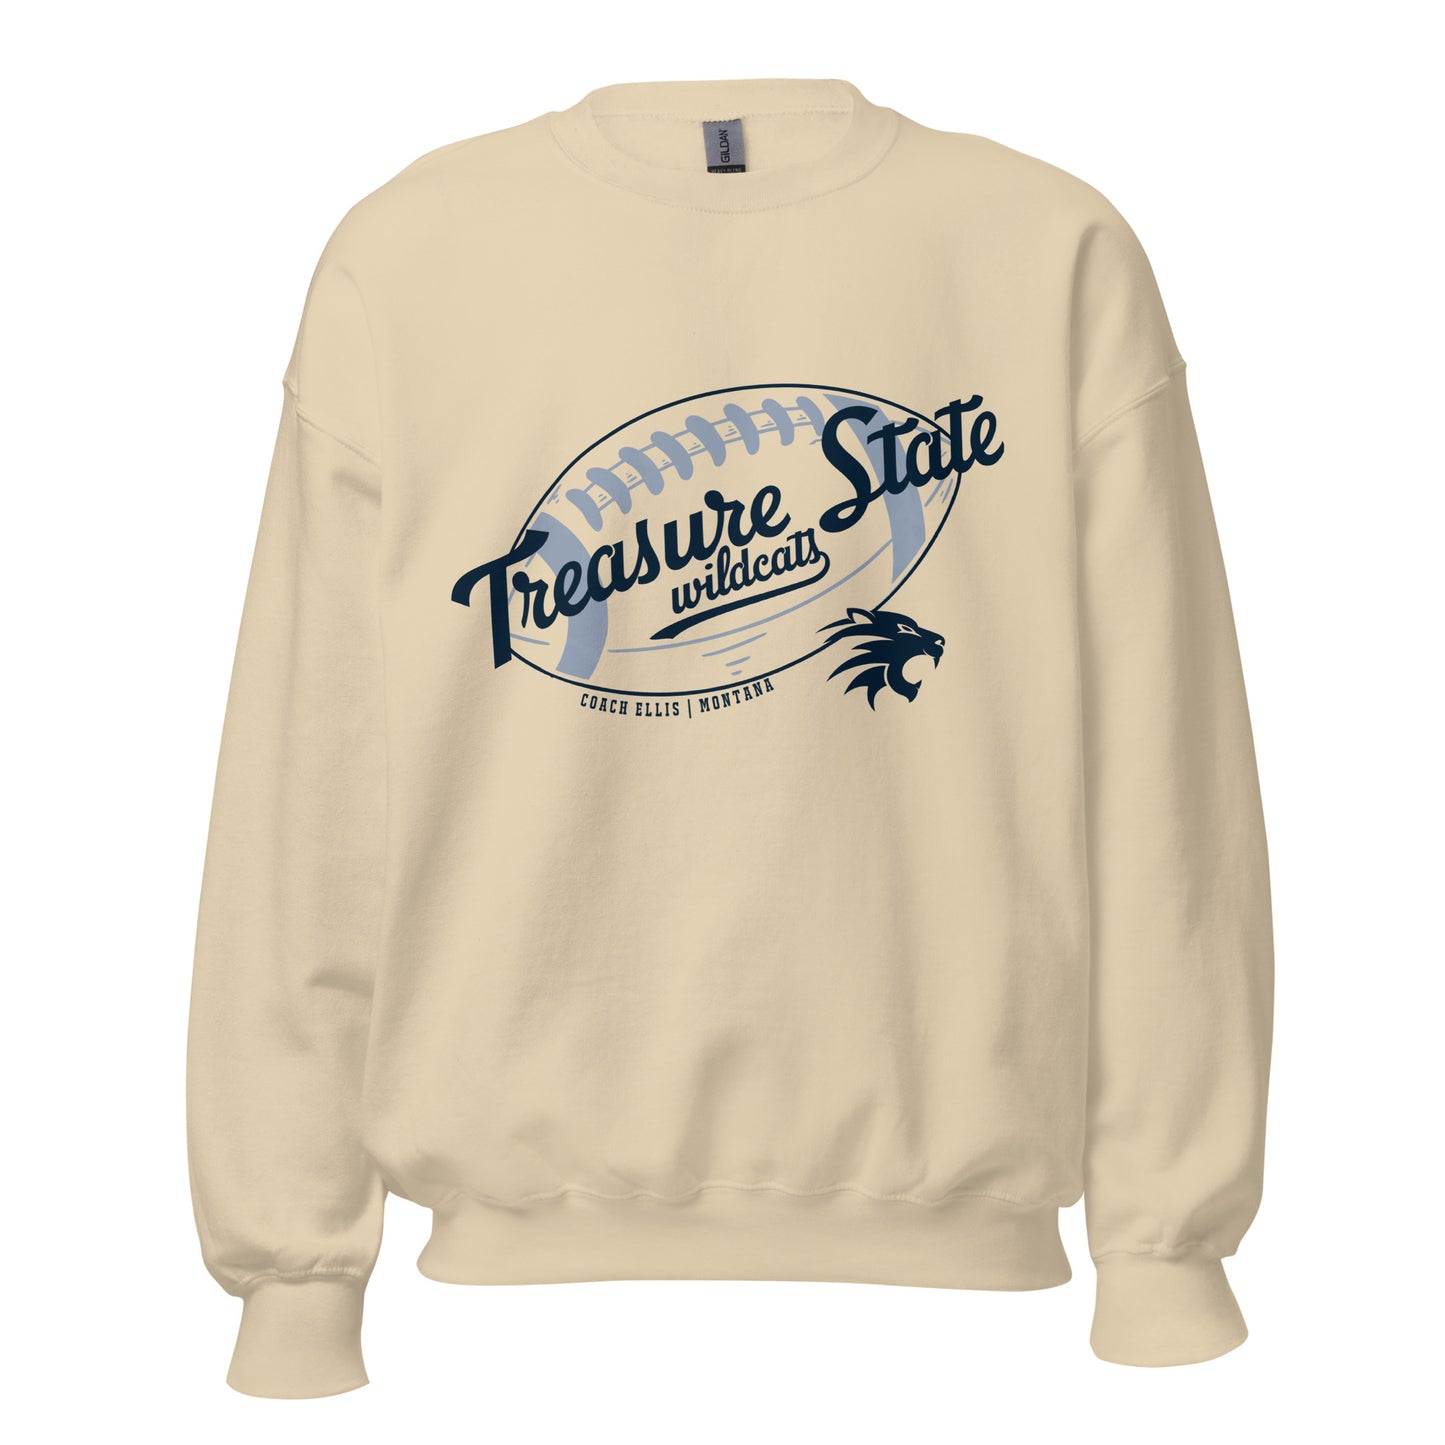 Treasure State Sweatshirt